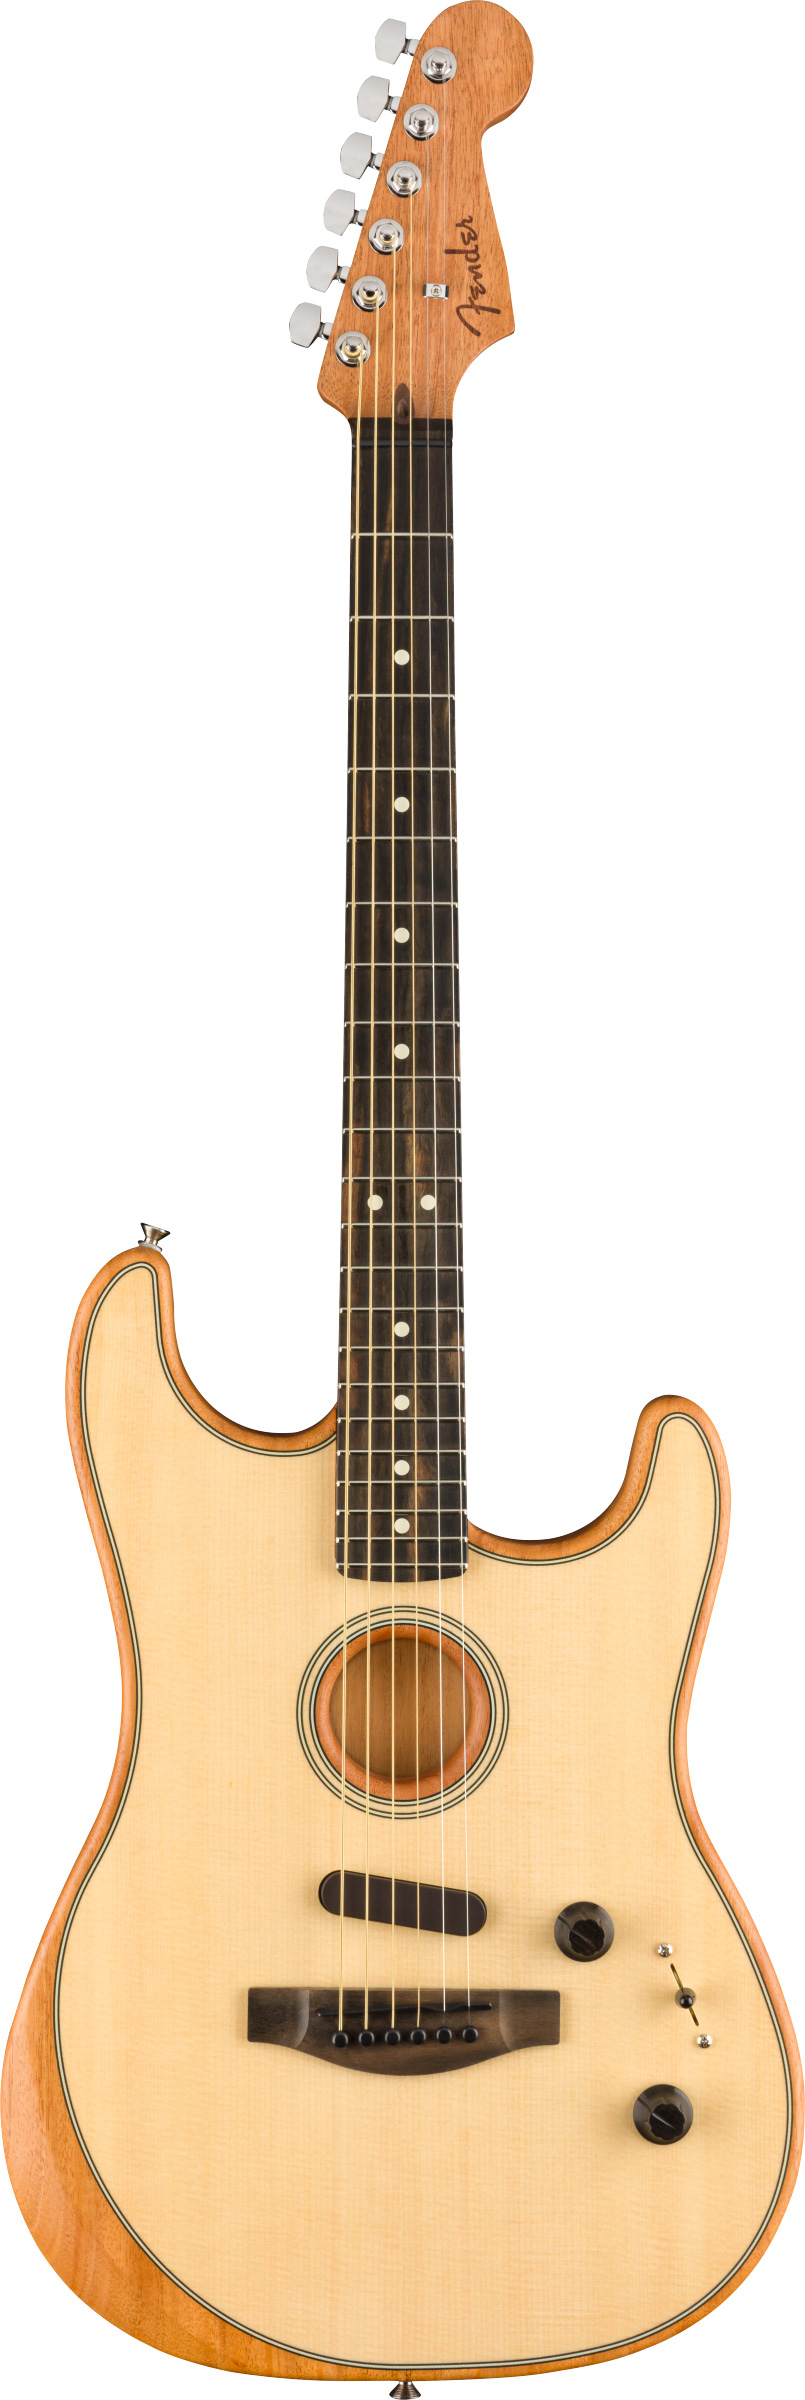 Fender Acoustasonic Strat Nat W Bag Made in USA elektro-akustinė gitara